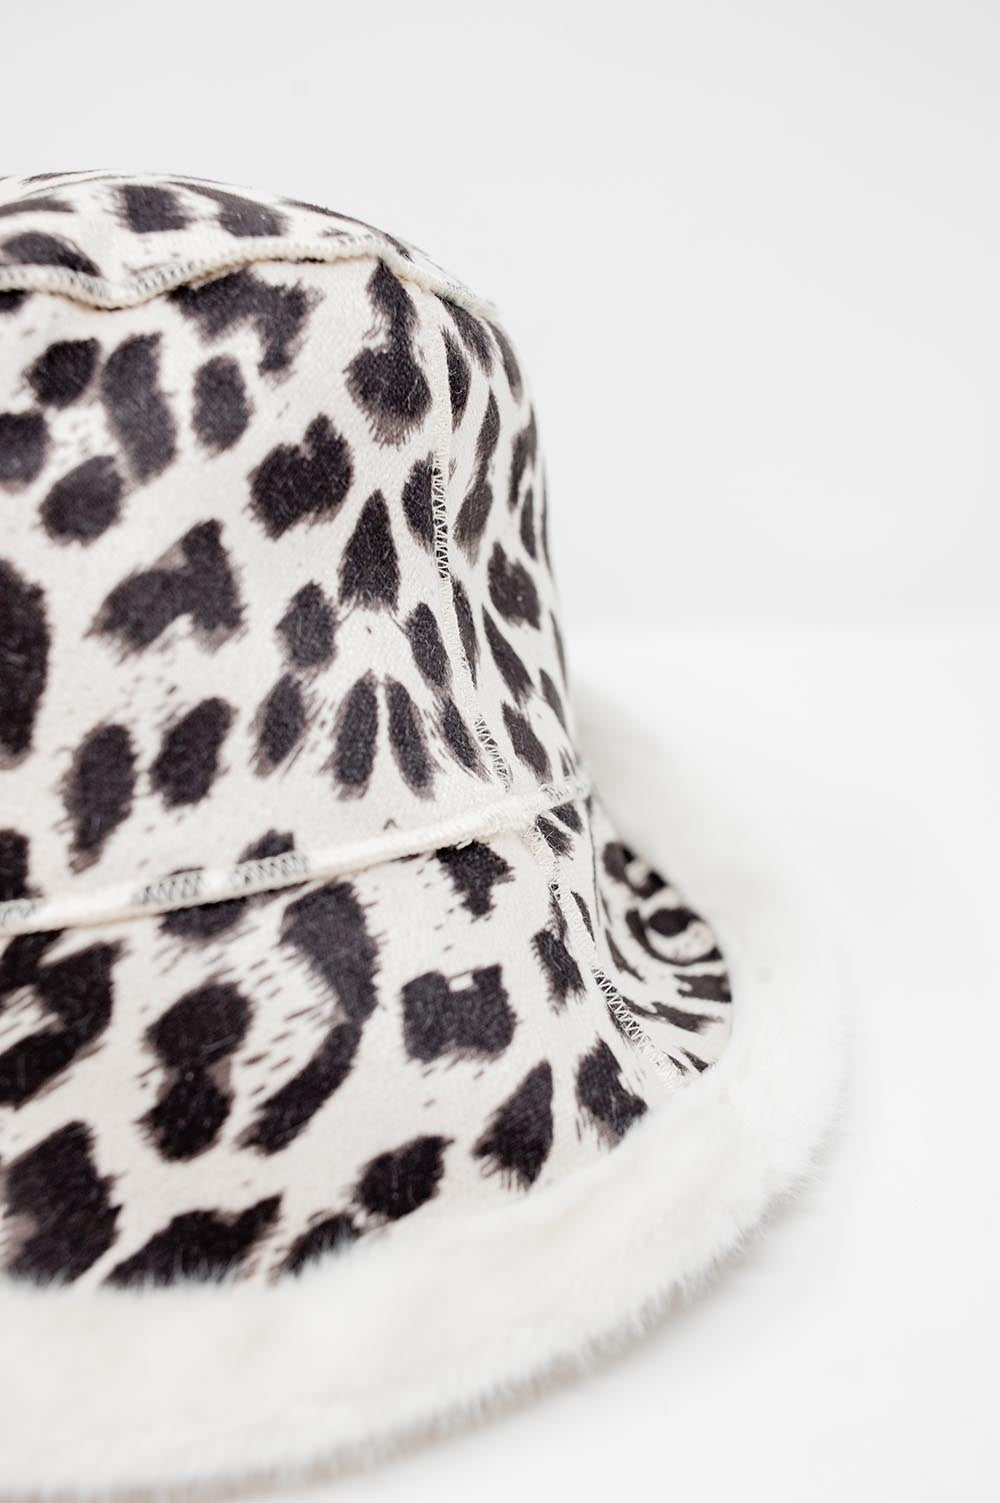 Cappellino bucket leopardato reversibile ecru